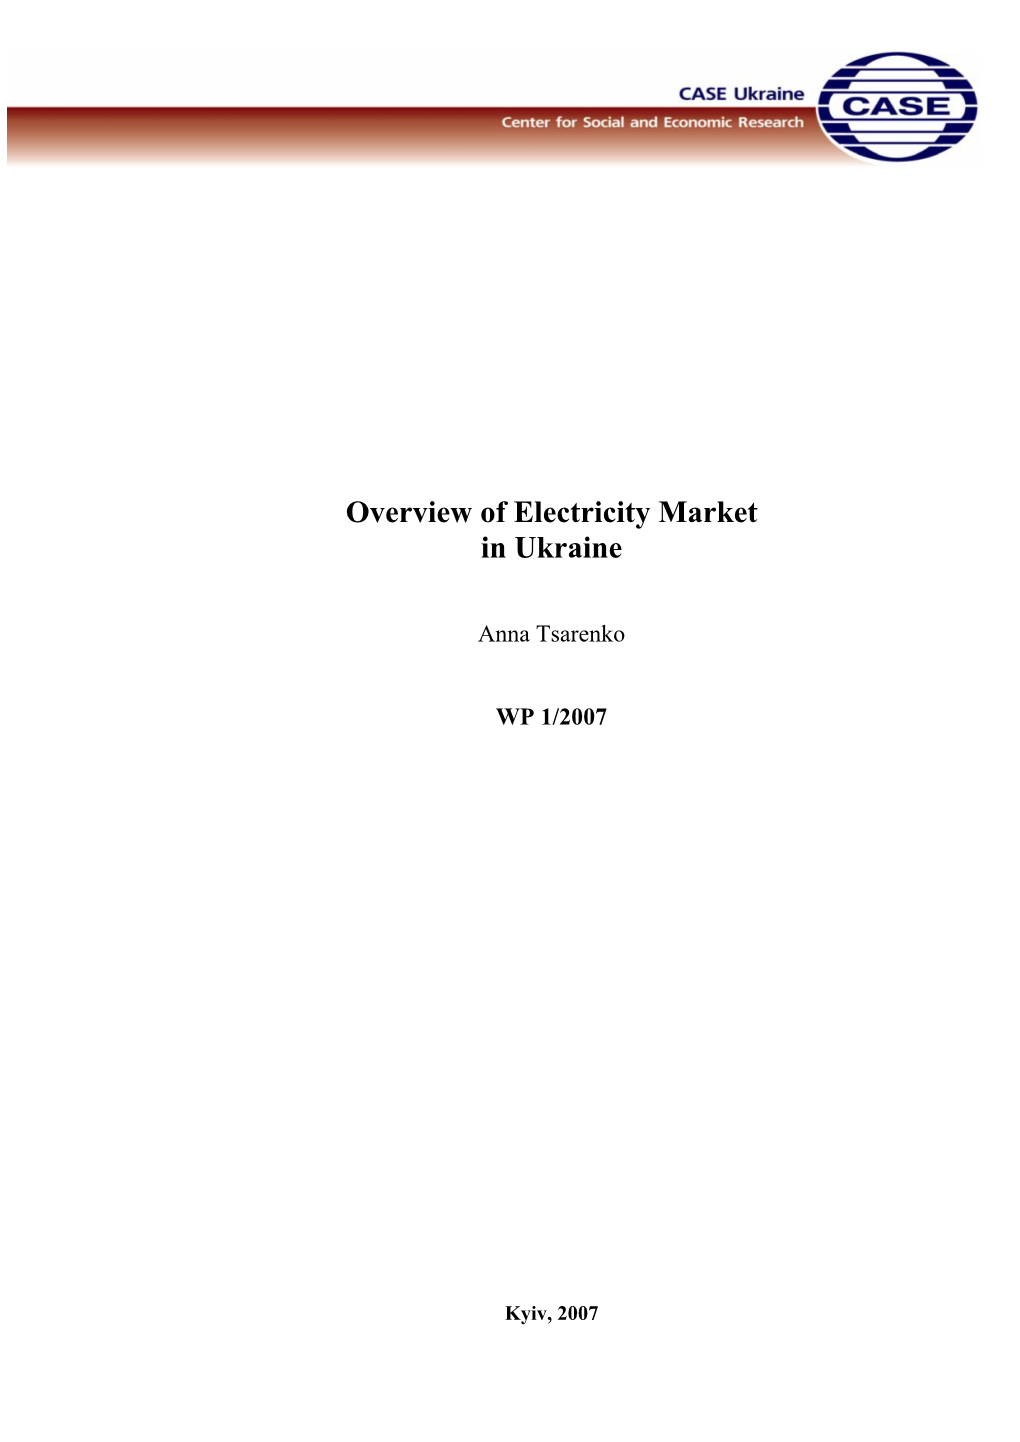 Overview of Electricity Market in Ukraine